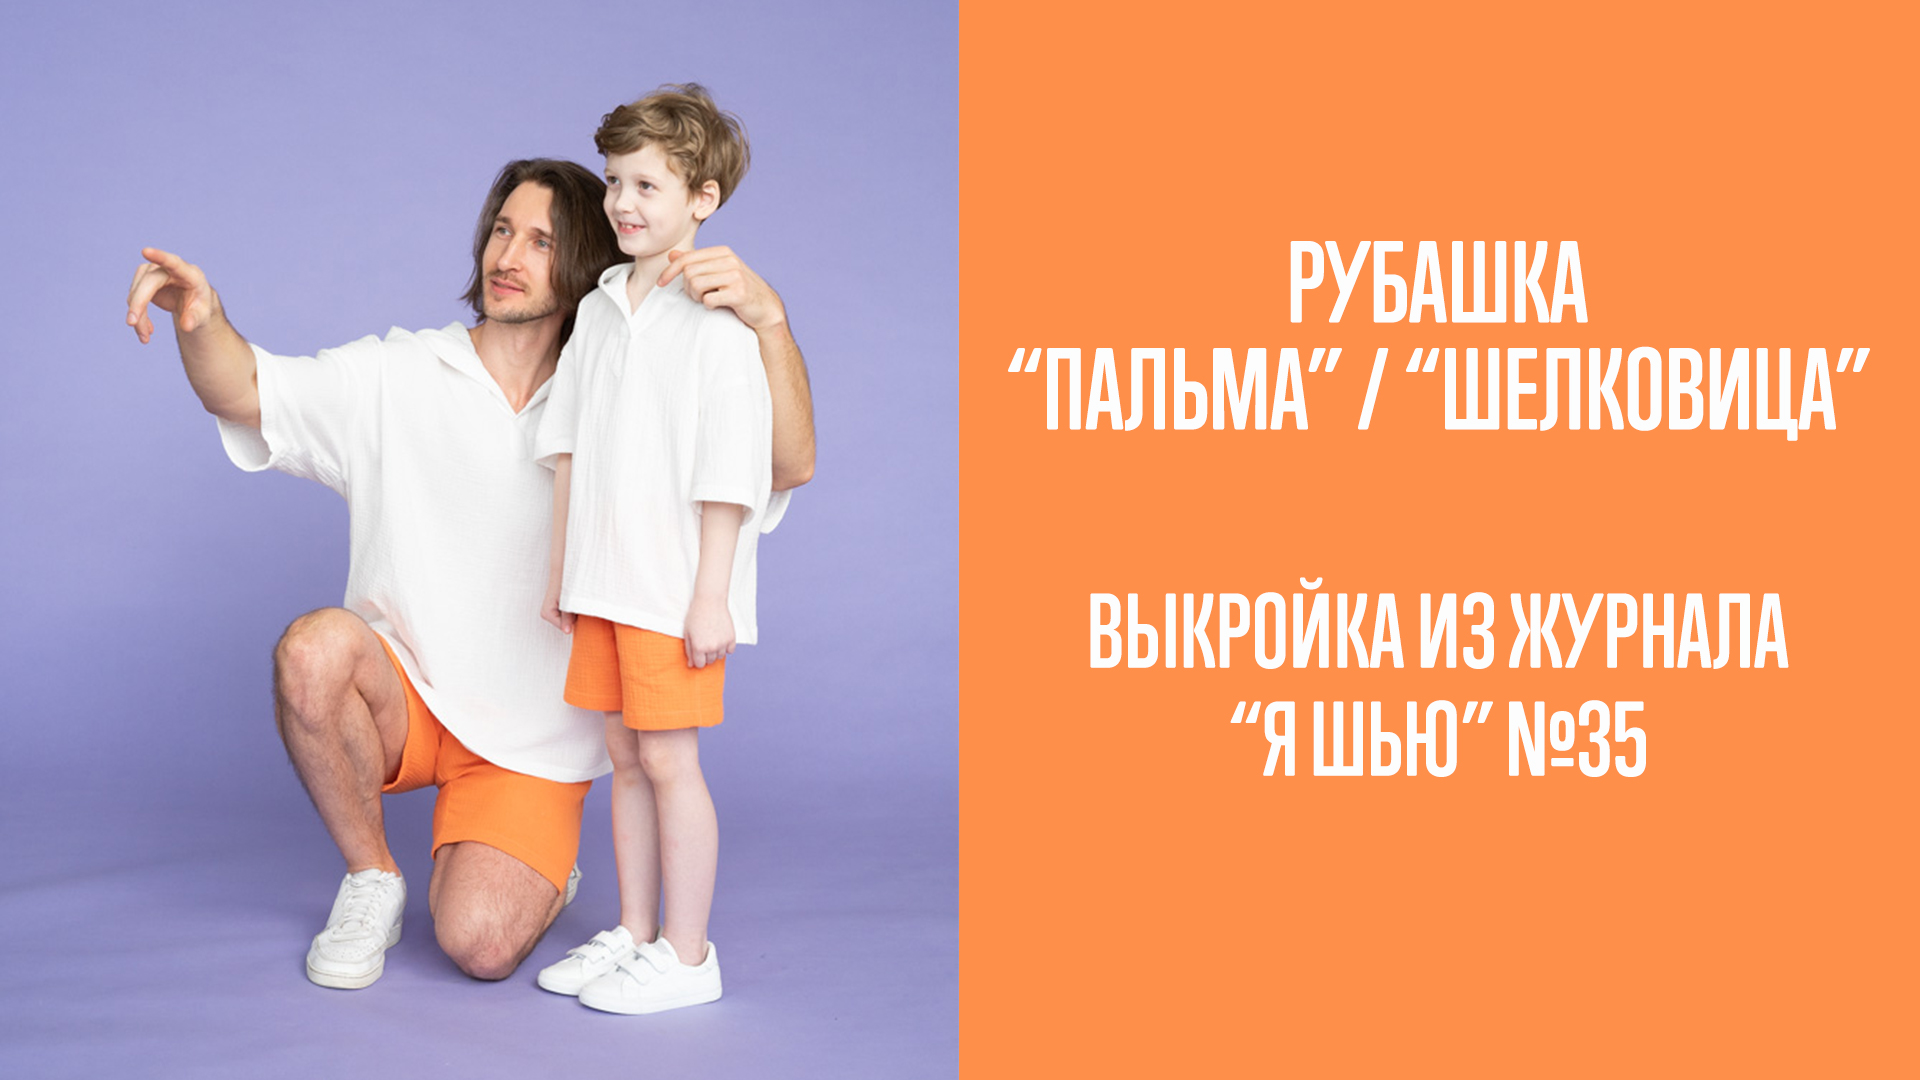 Рубашка "ПАЛЬМА" / "ШЕЛКОВИЦА". Журнал "Я шью" №35